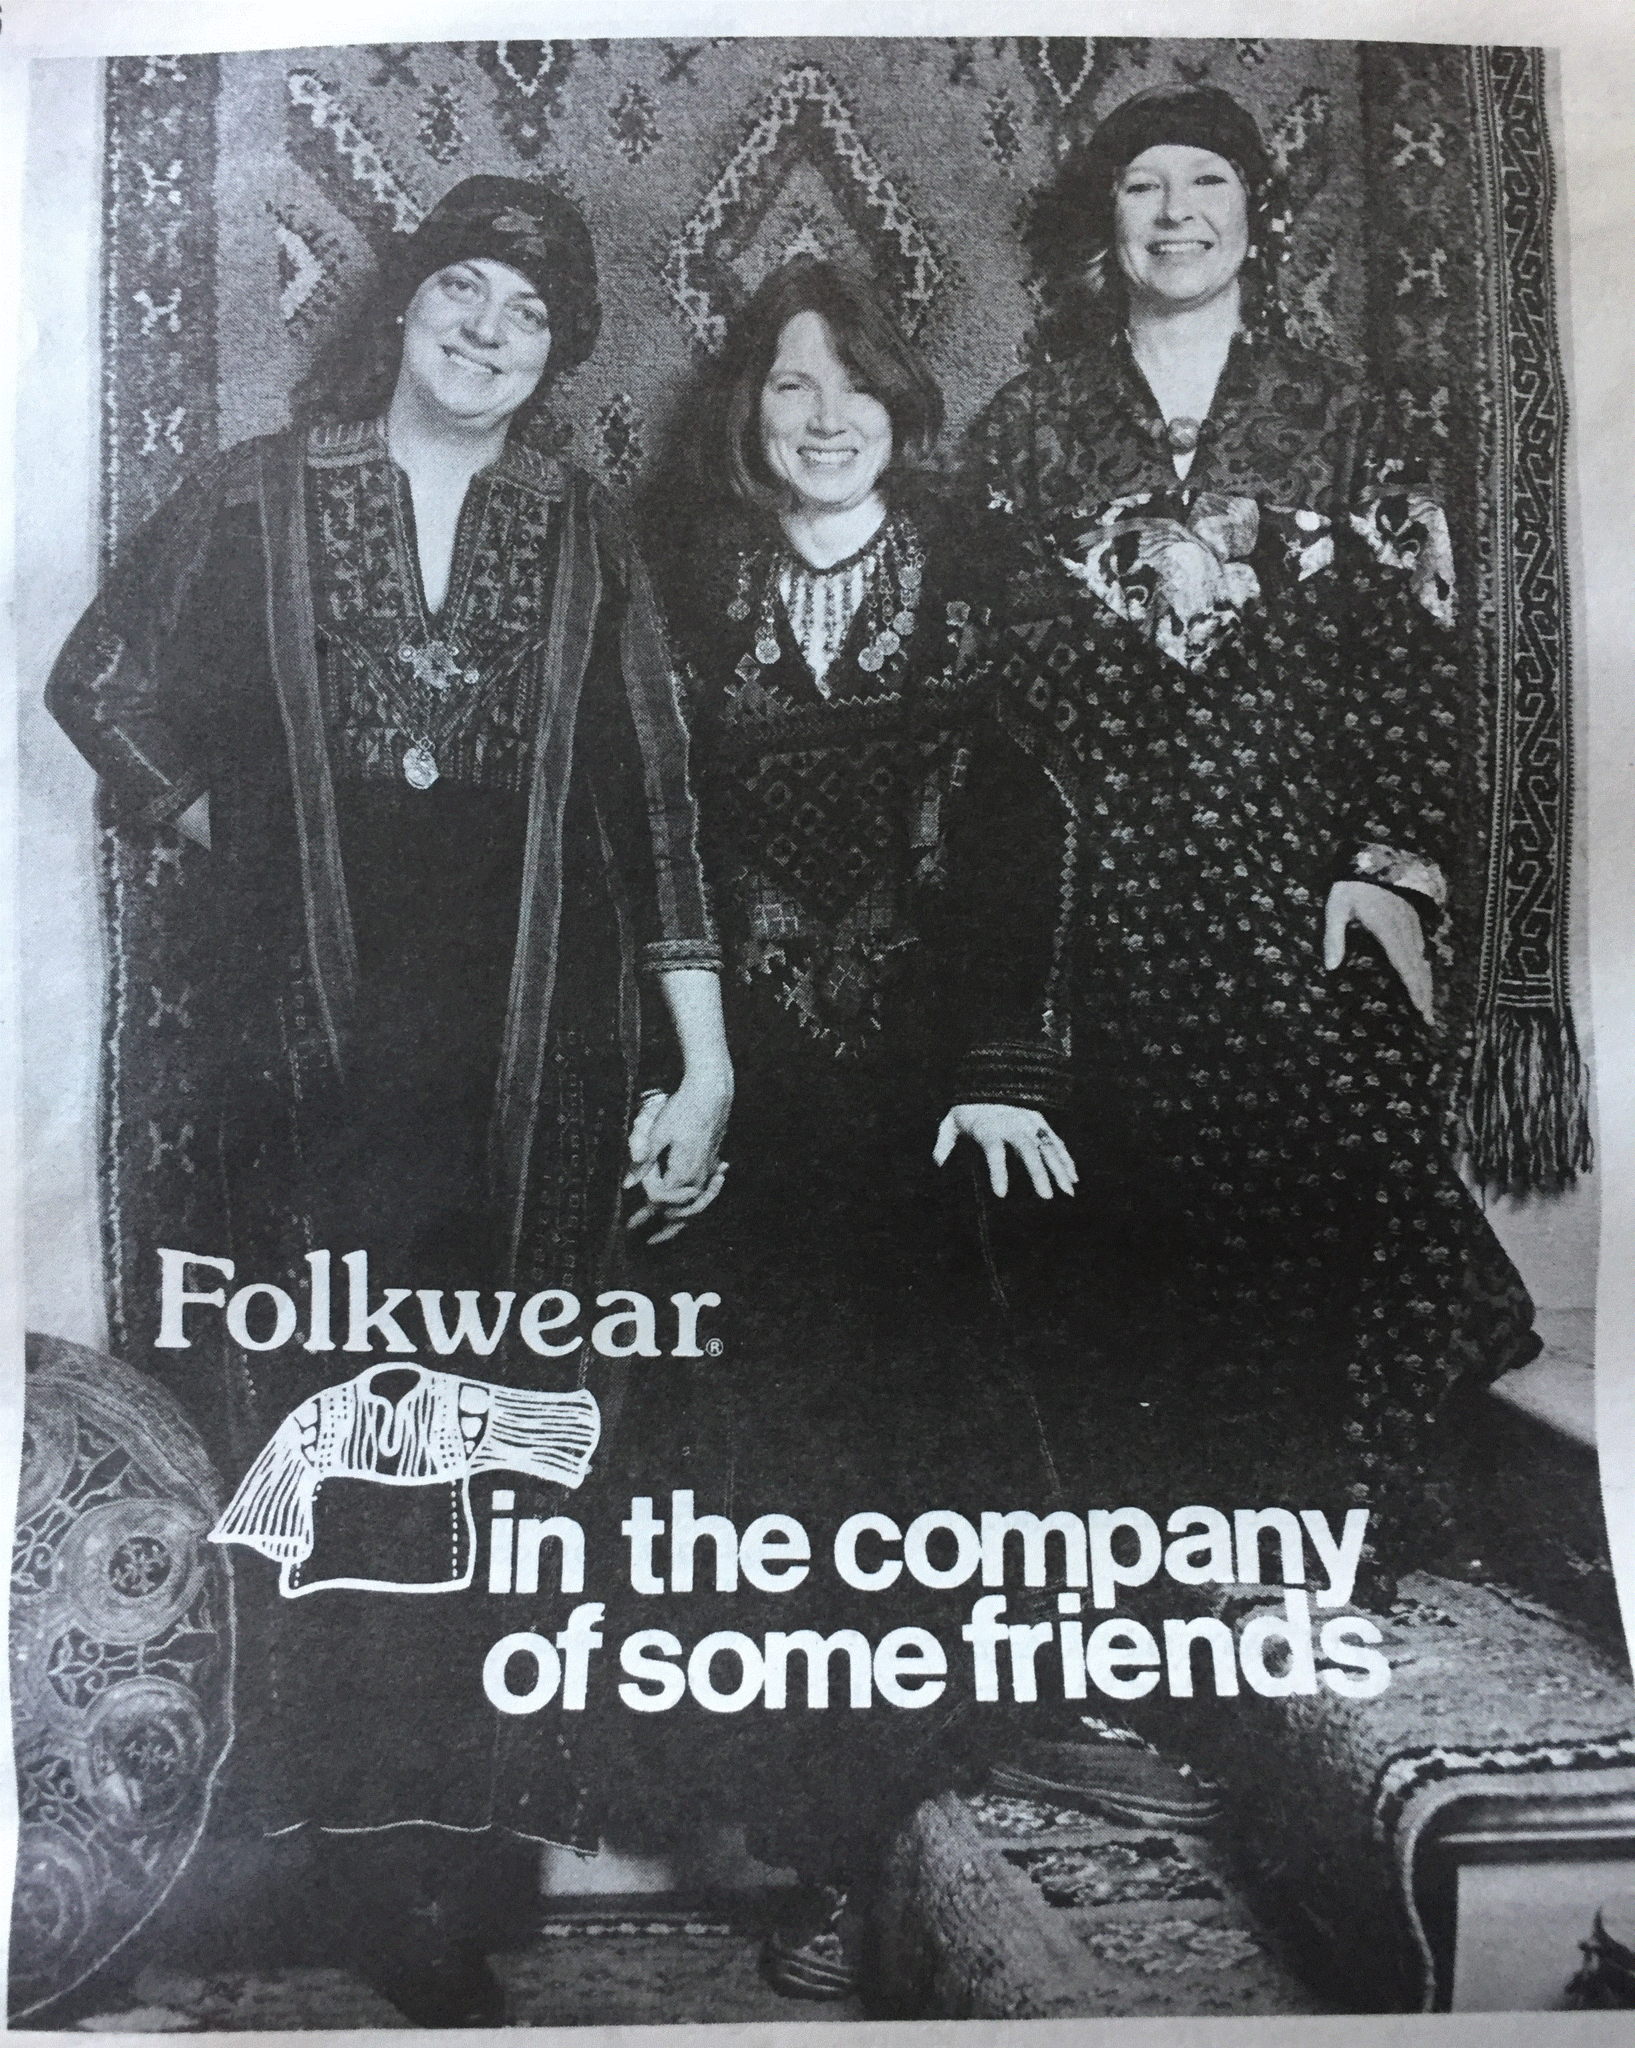 Founders of Folkwear - from Fiber Arts Magazine